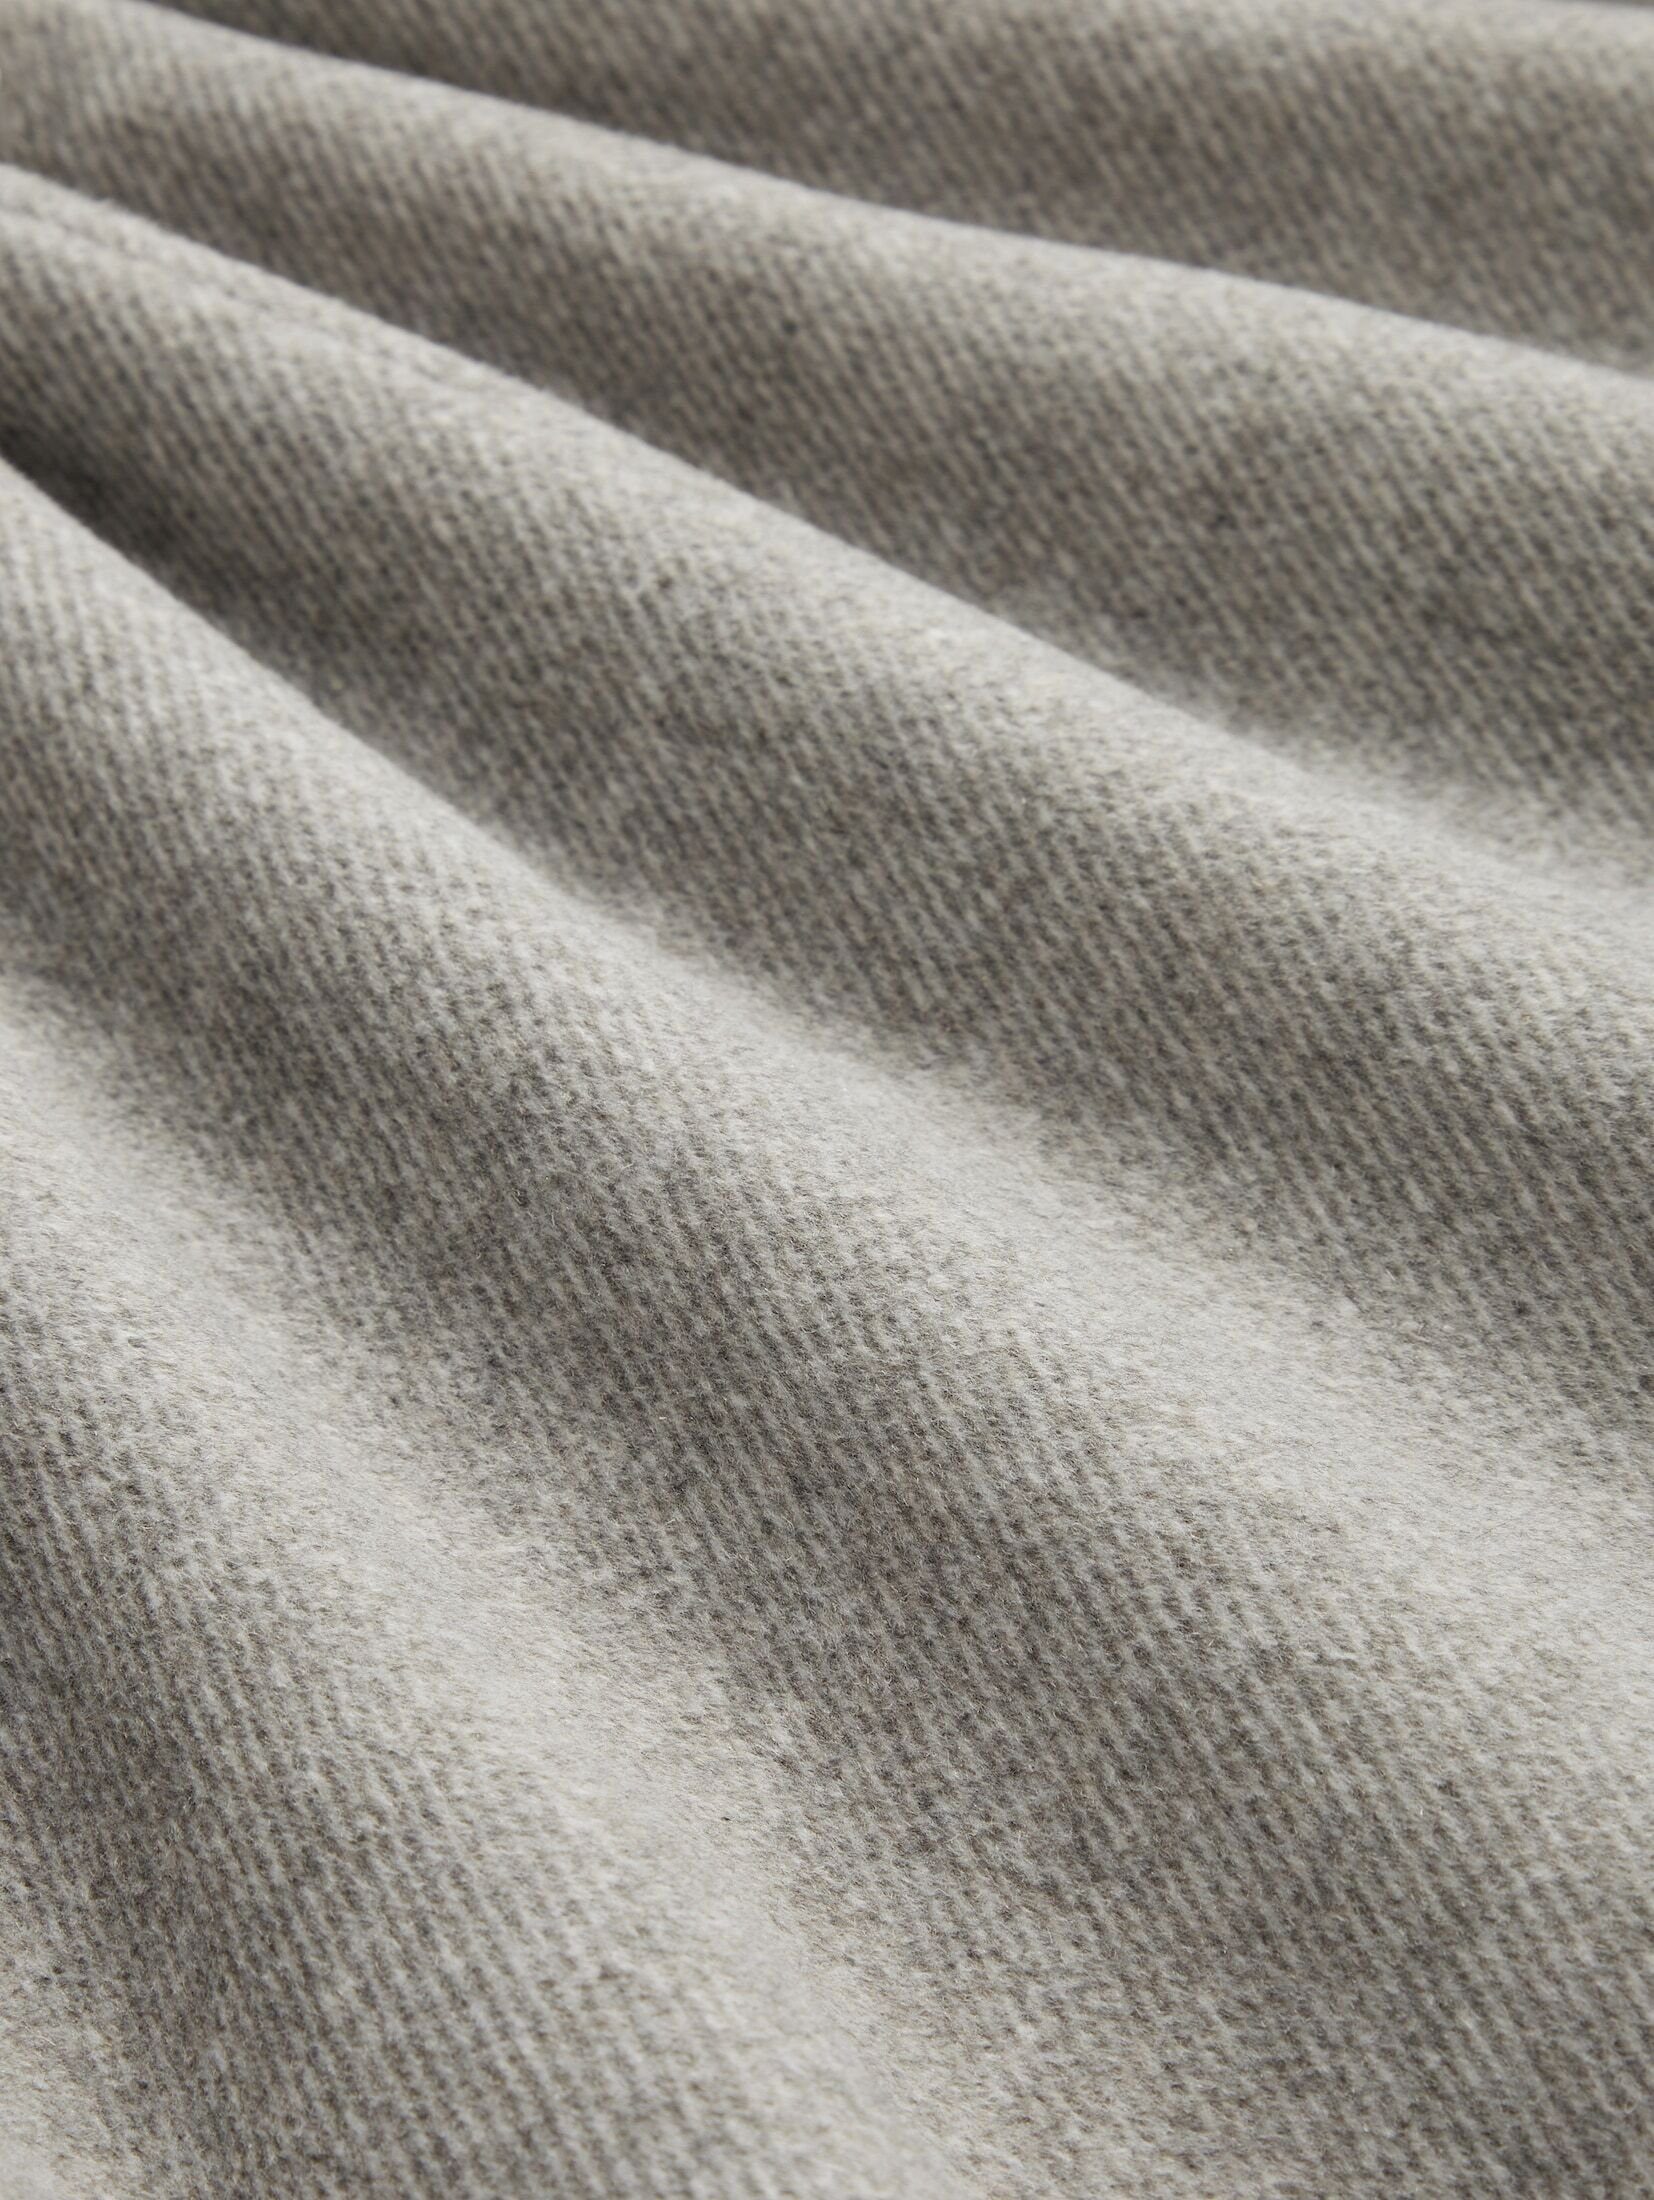 Kurzmantel TAILOR grey Jacke twill light wool TOM 2-in-1 stone